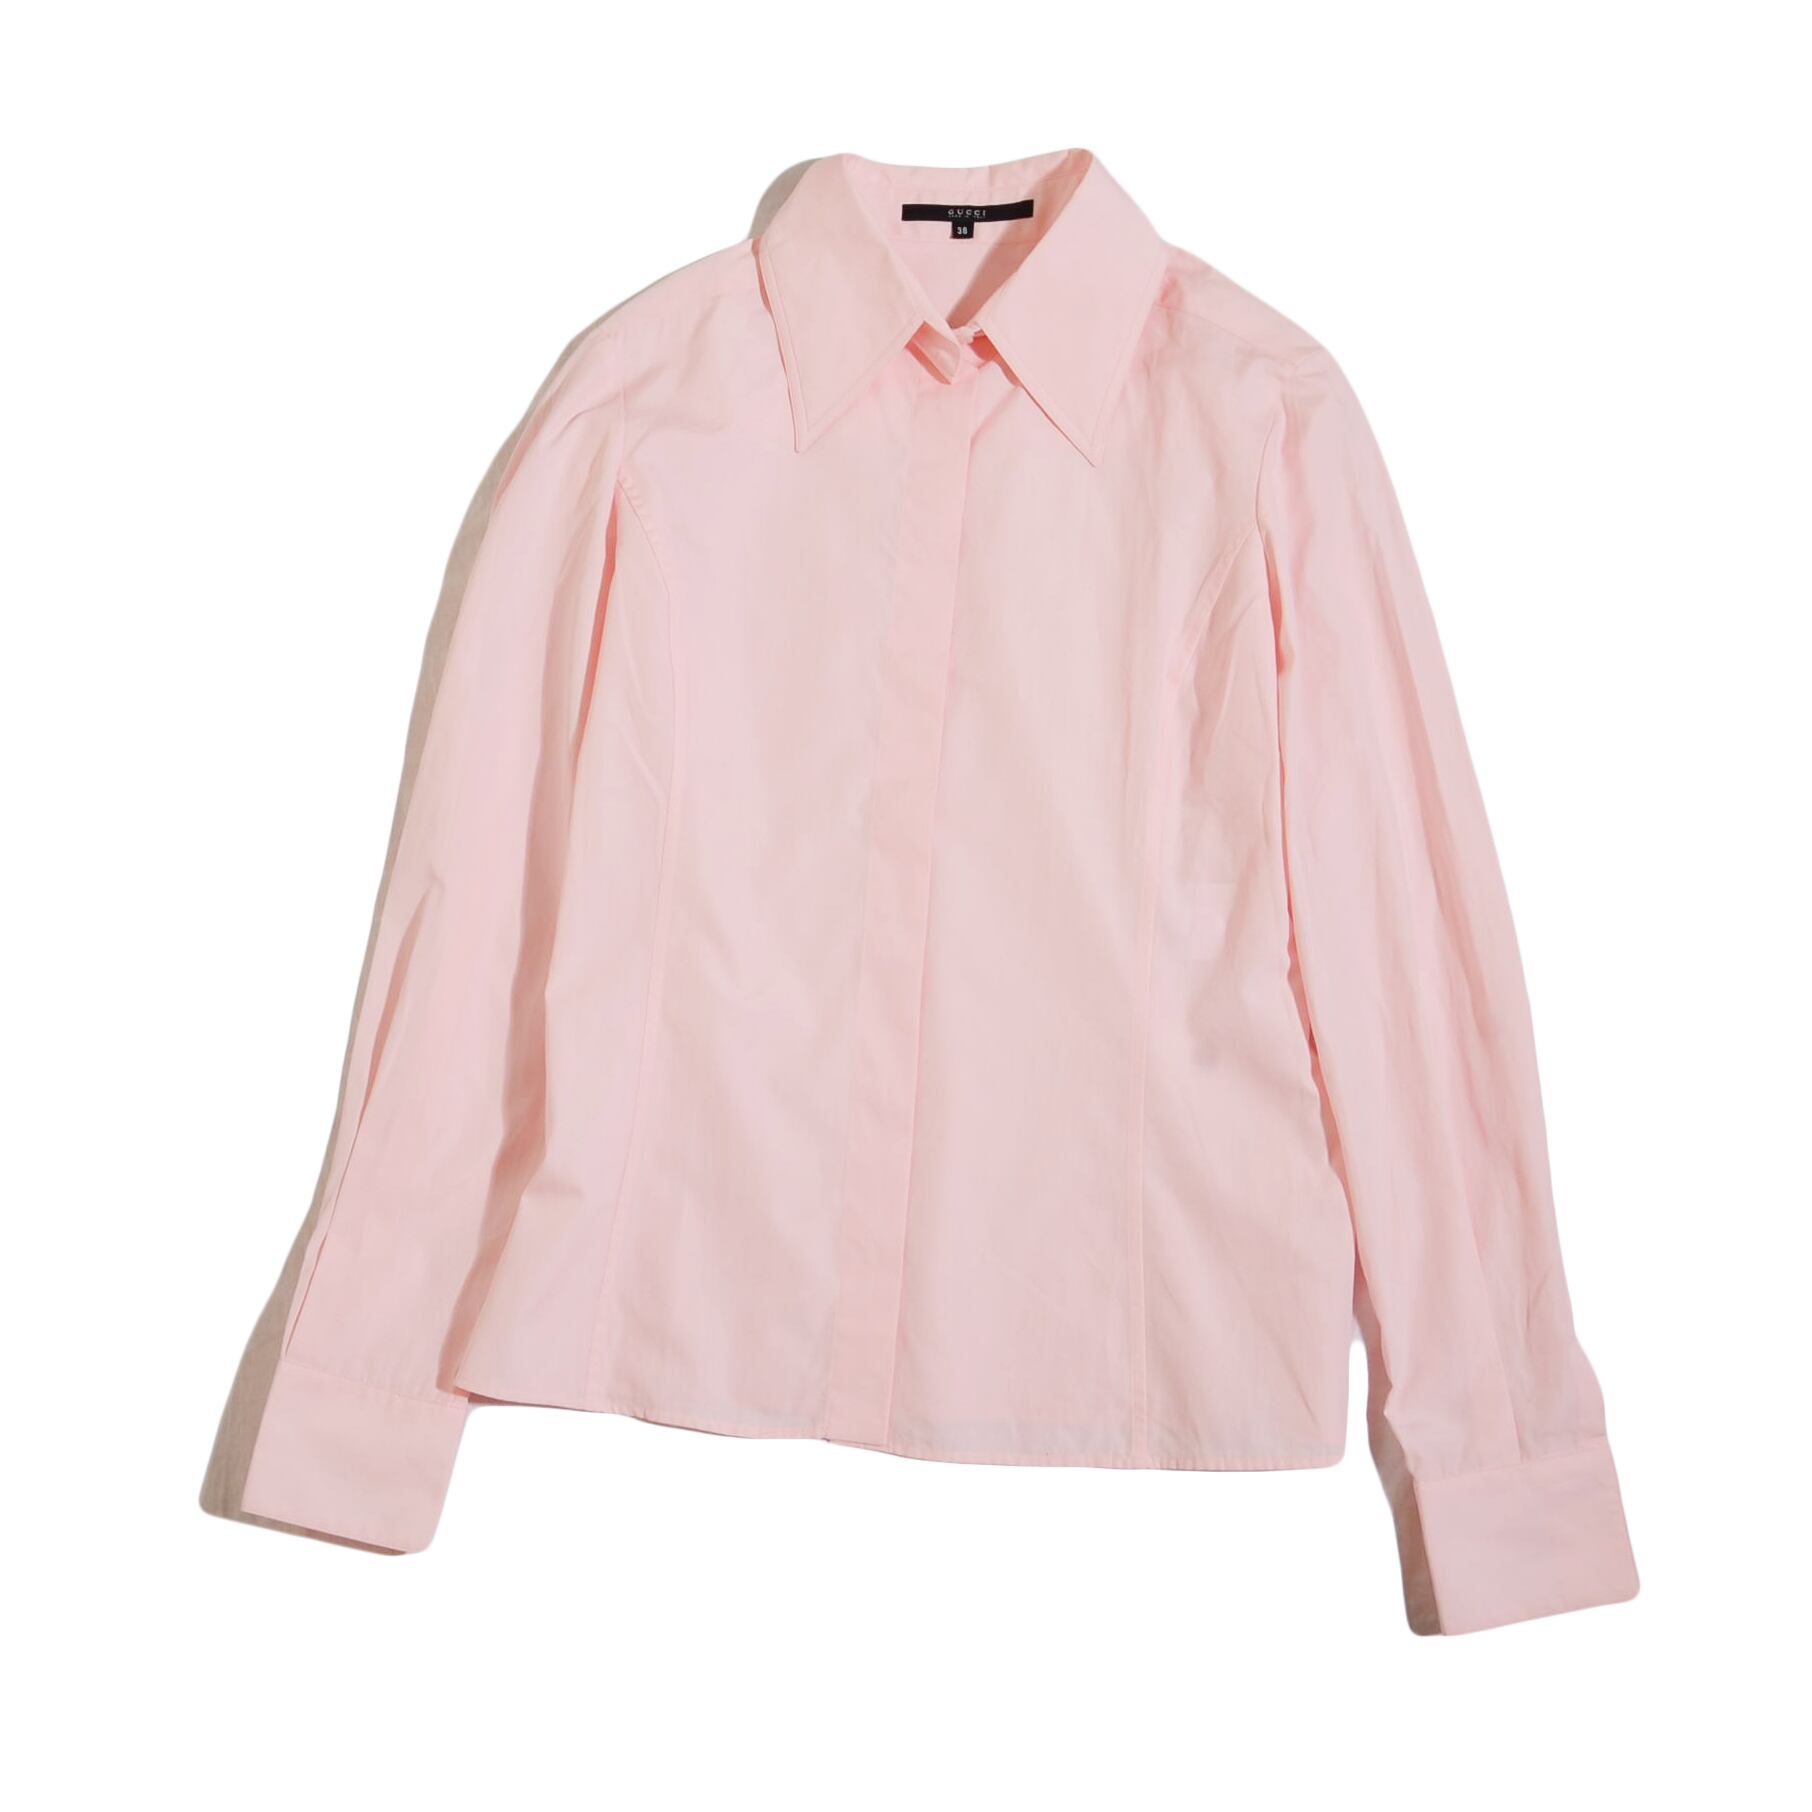 Gucci       designed sleeve     pink   plain shirts